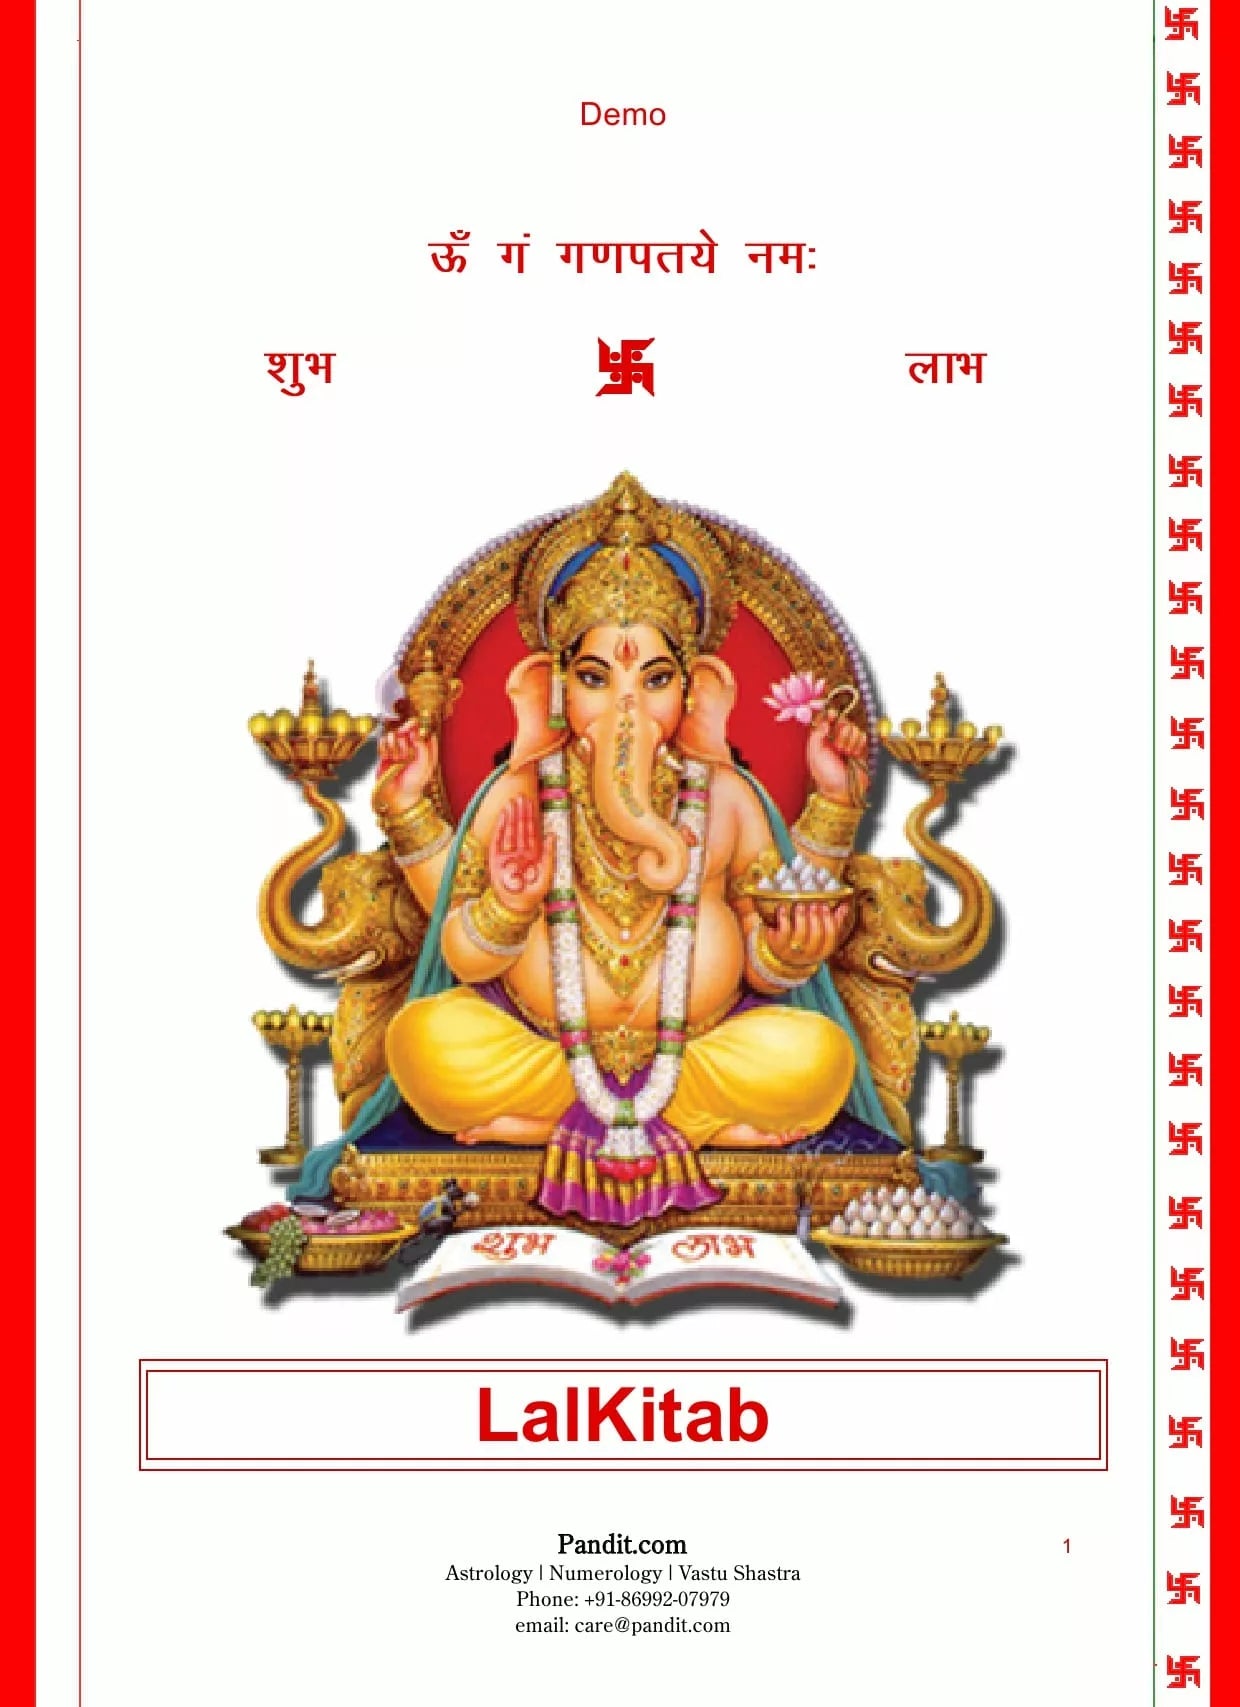 LalKitab Horoscope Sample 1